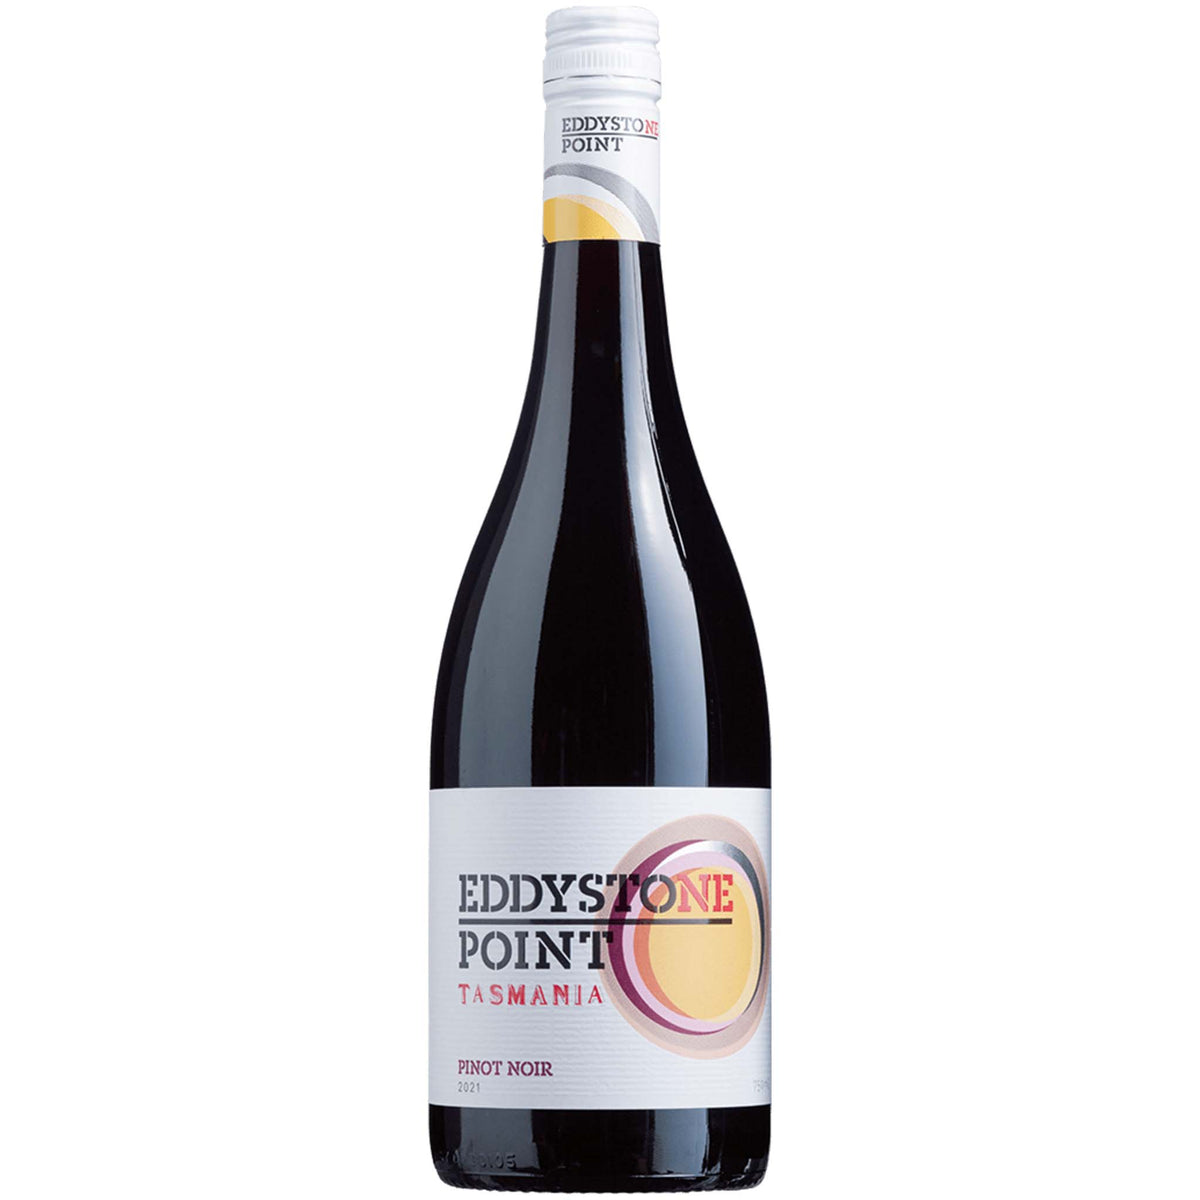 Eddystone Point Pinot Noir 2021